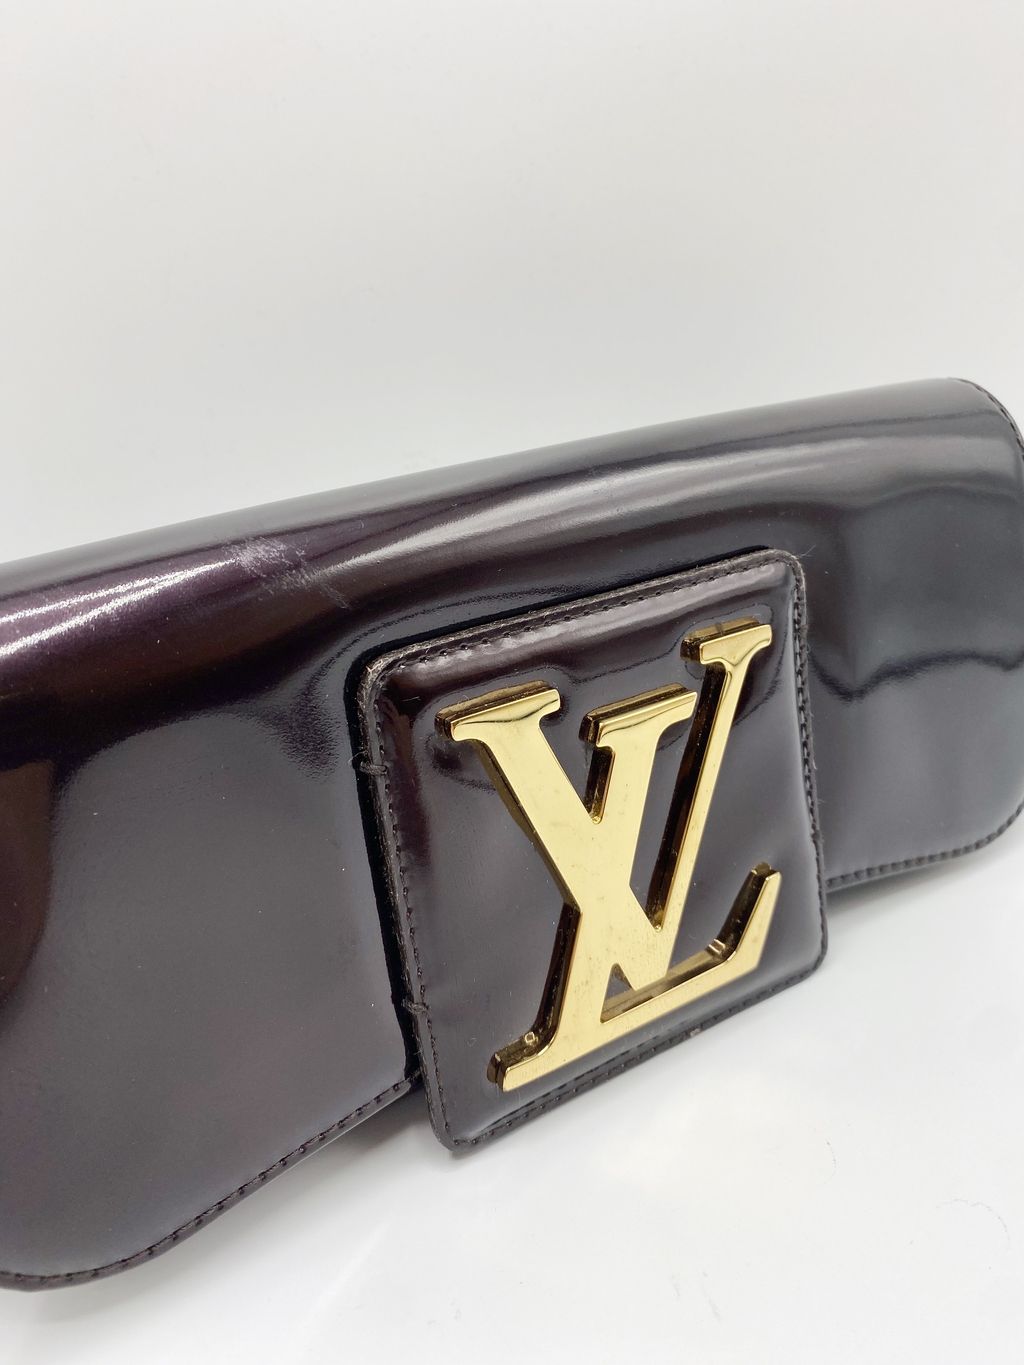 LOUIS VUITTON Amarante Vernis Glossy Patent Calf Leather SoBe